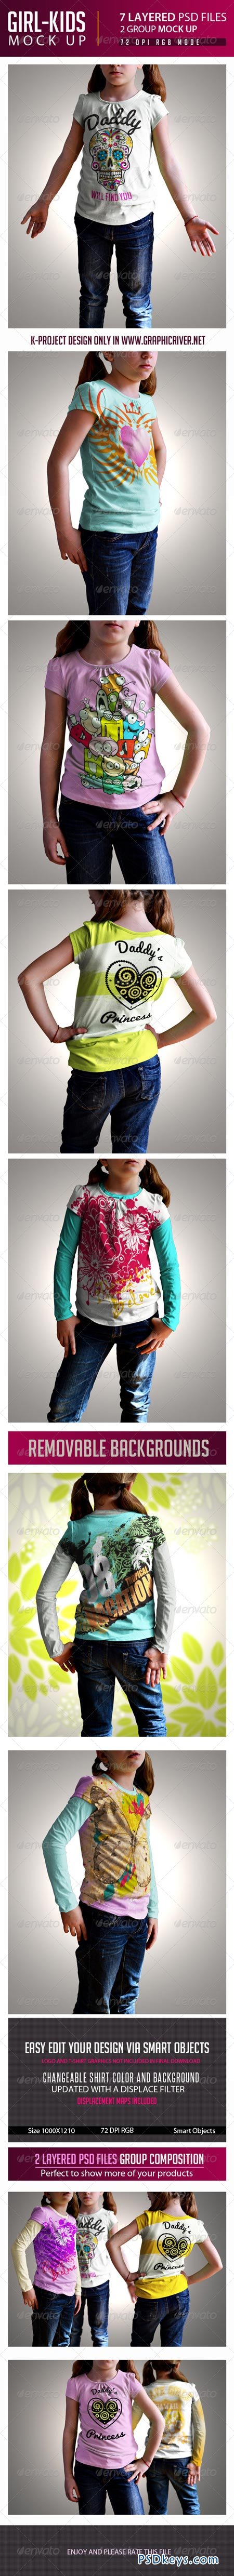 Girl Kids T-Shirt Mock Up 7204419